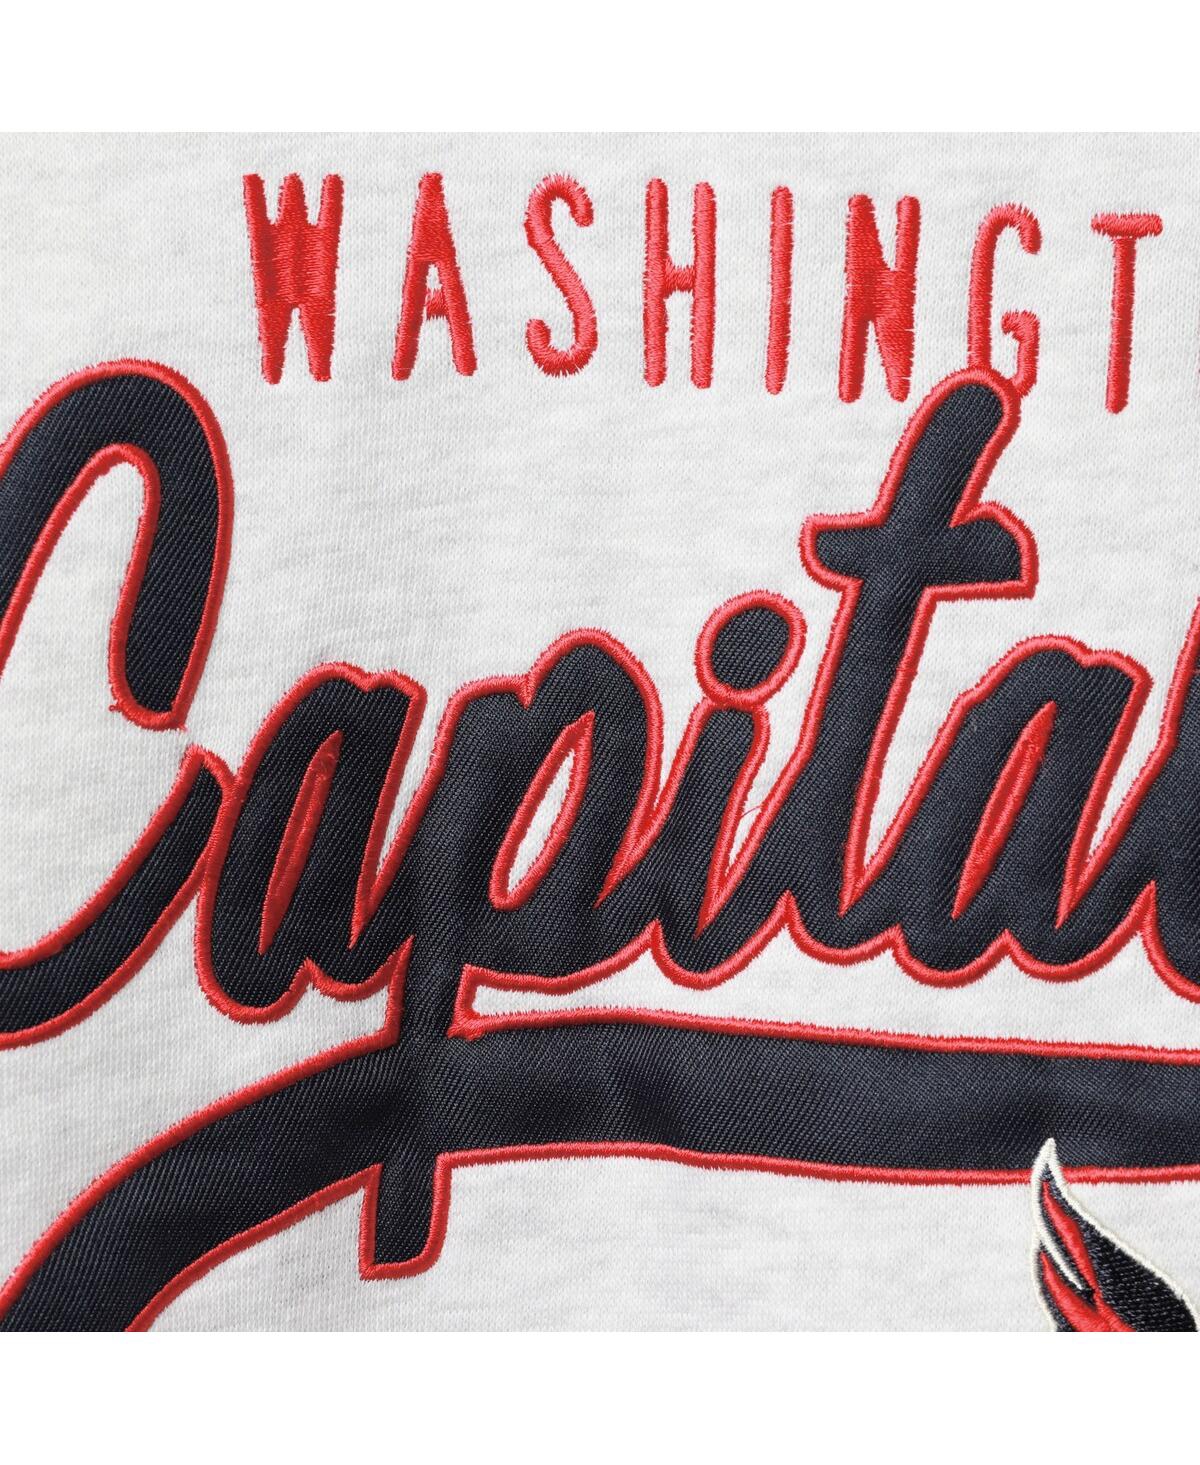 Shop Outerstuff Big Boys Heathered Gray Washington Capitals Legends Pullover Sweatshirt